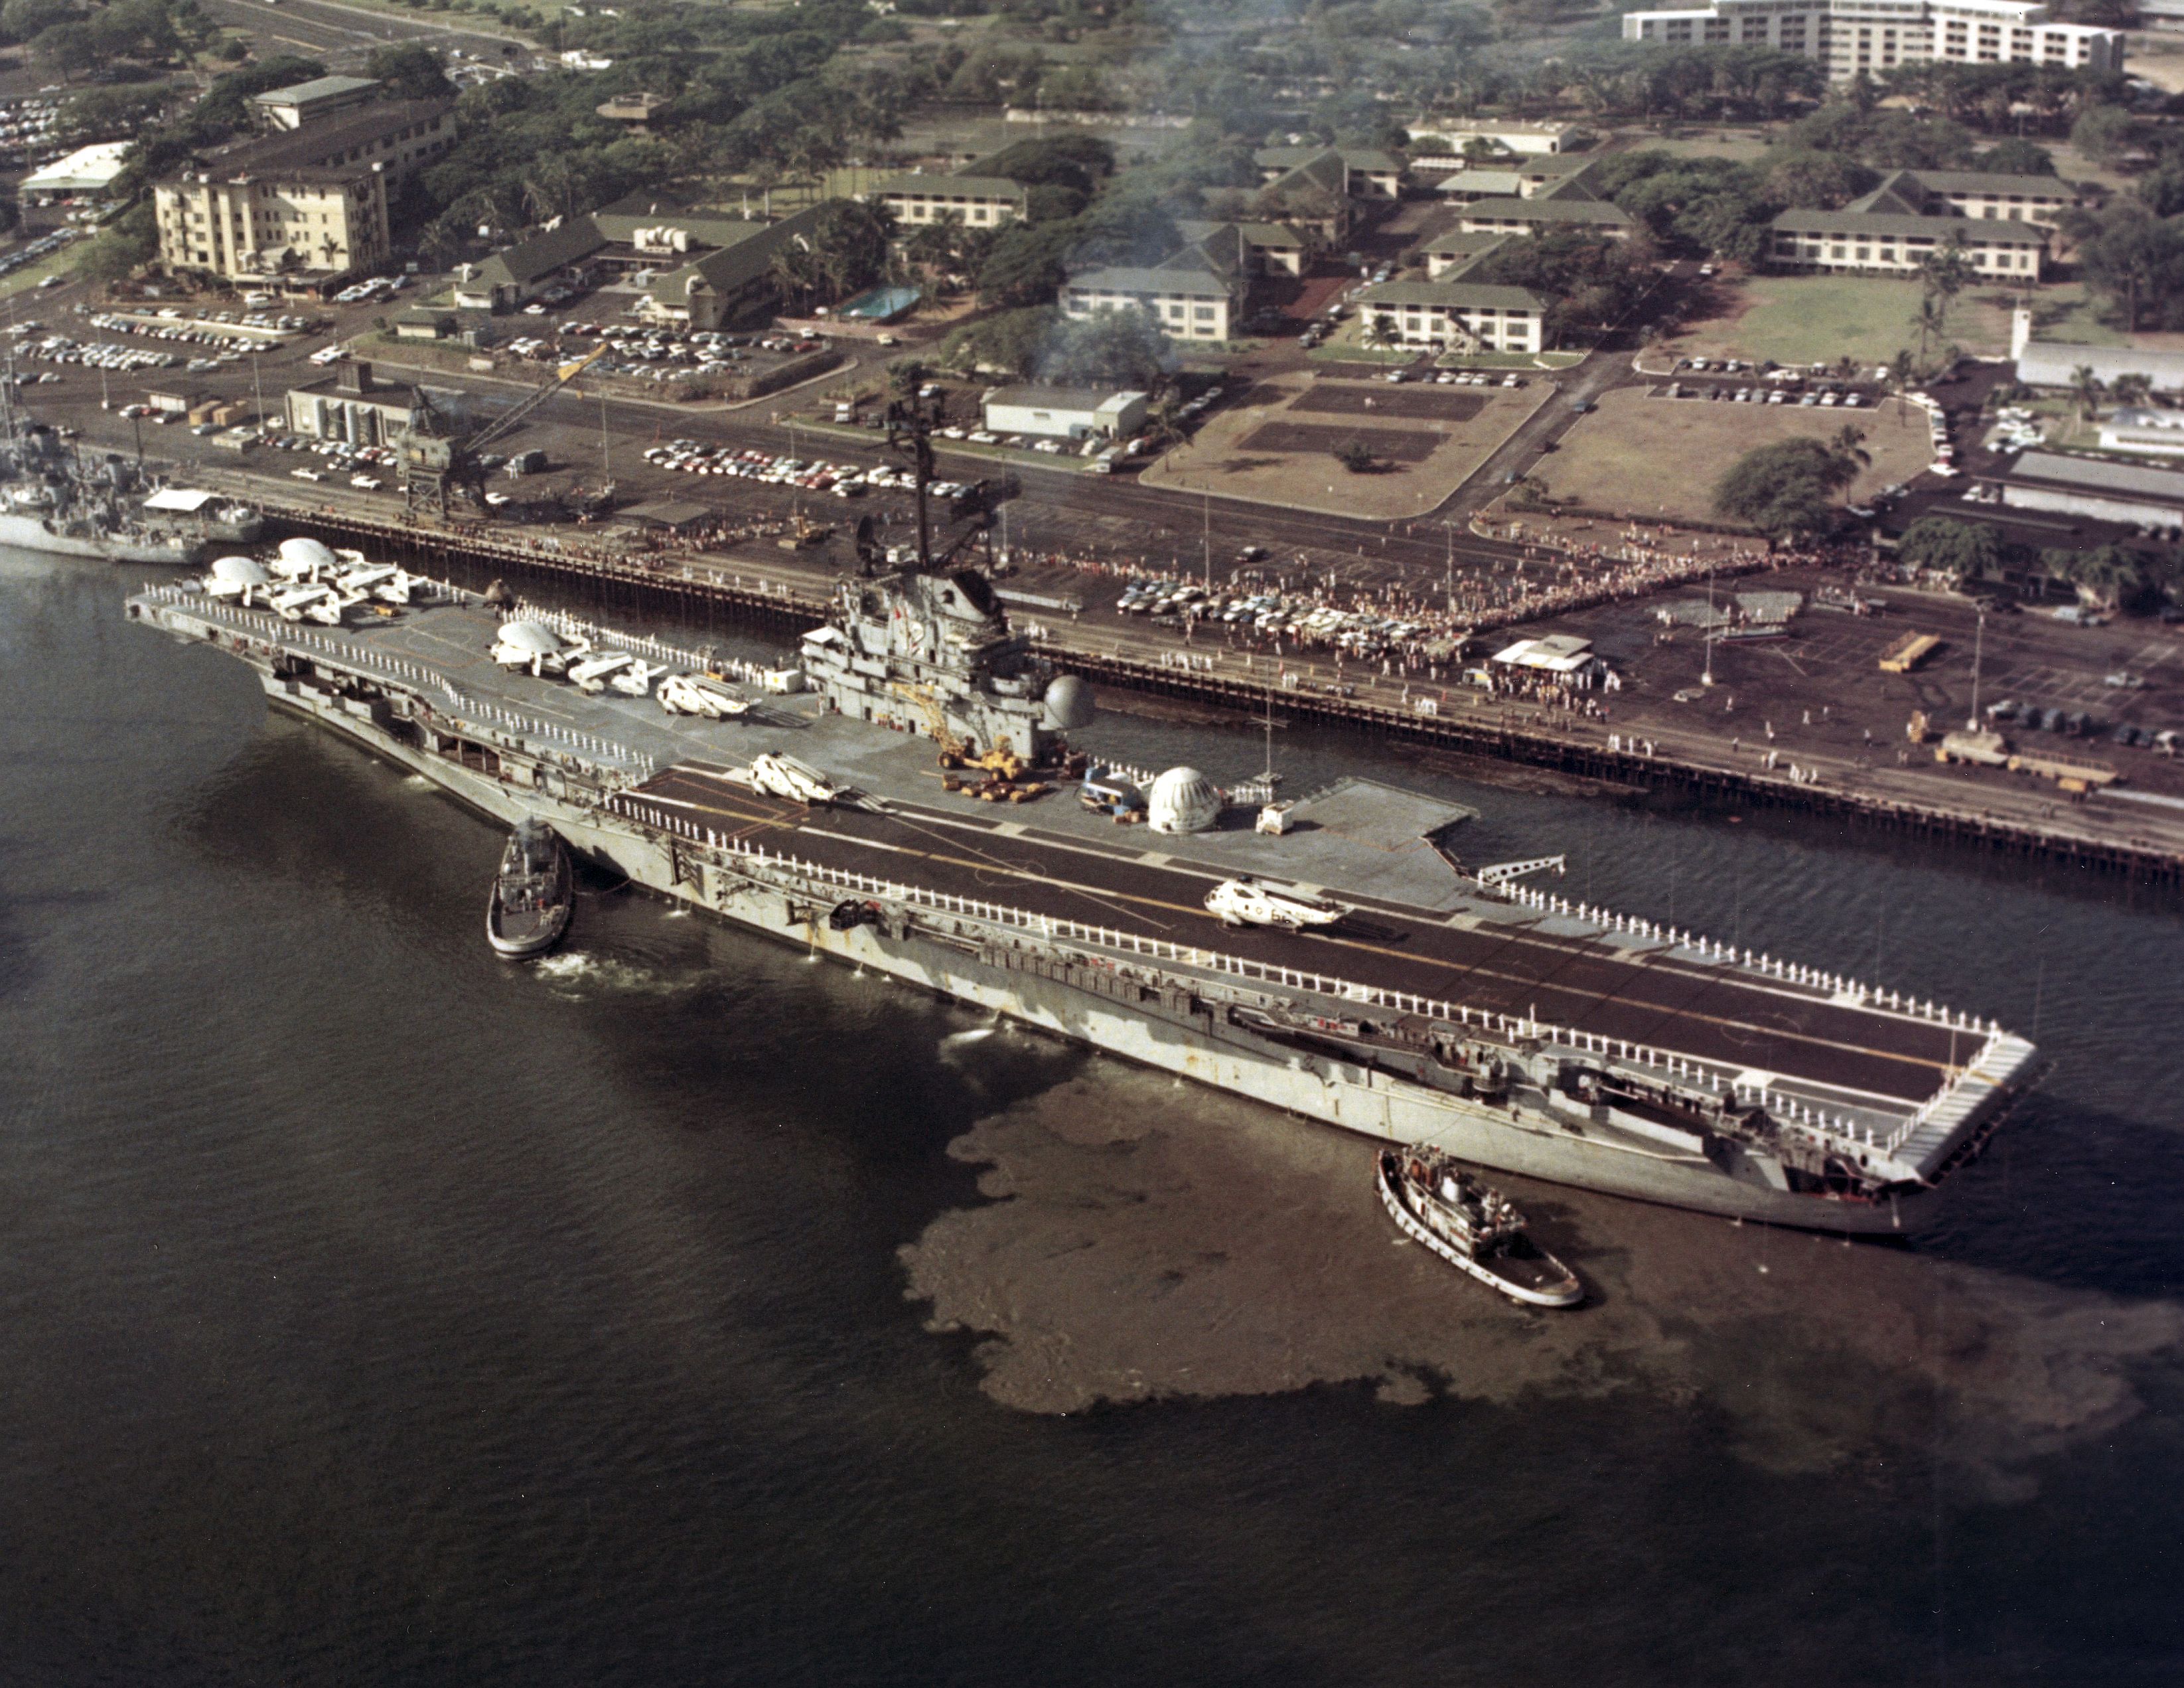 Two days after splashdown, the U.S.S. Hornet docks at Pearl Harbor in Honolulu